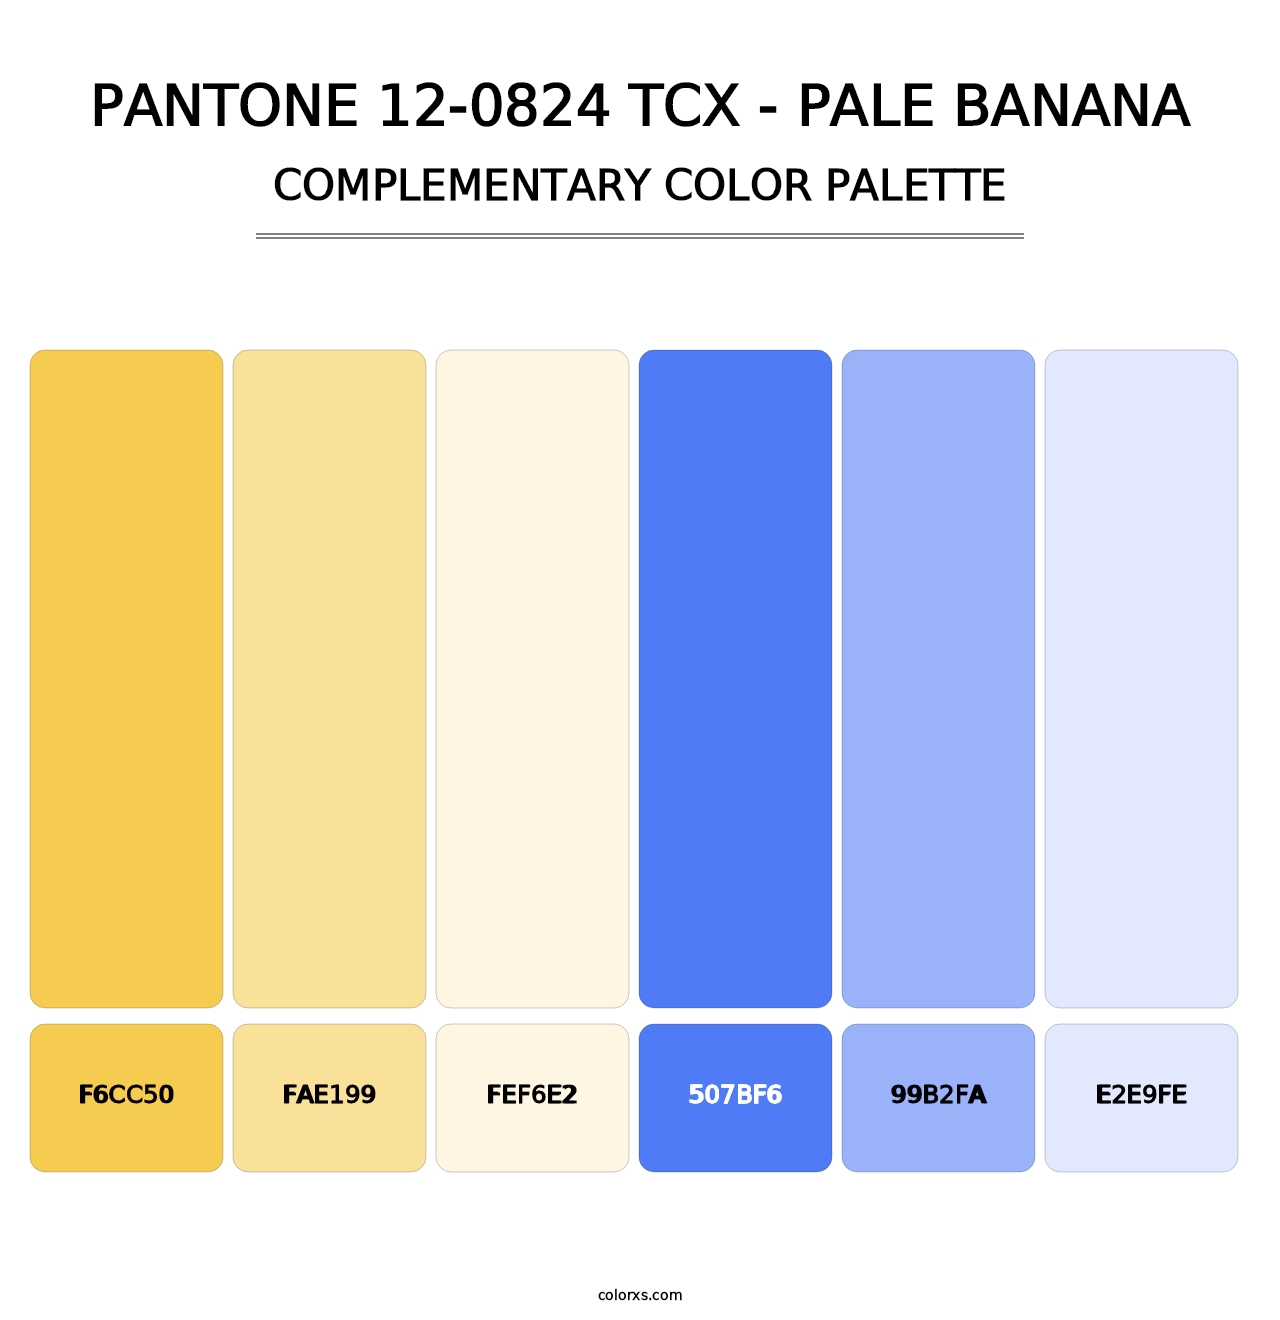 PANTONE 12-0824 TCX - Pale Banana - Complementary Color Palette